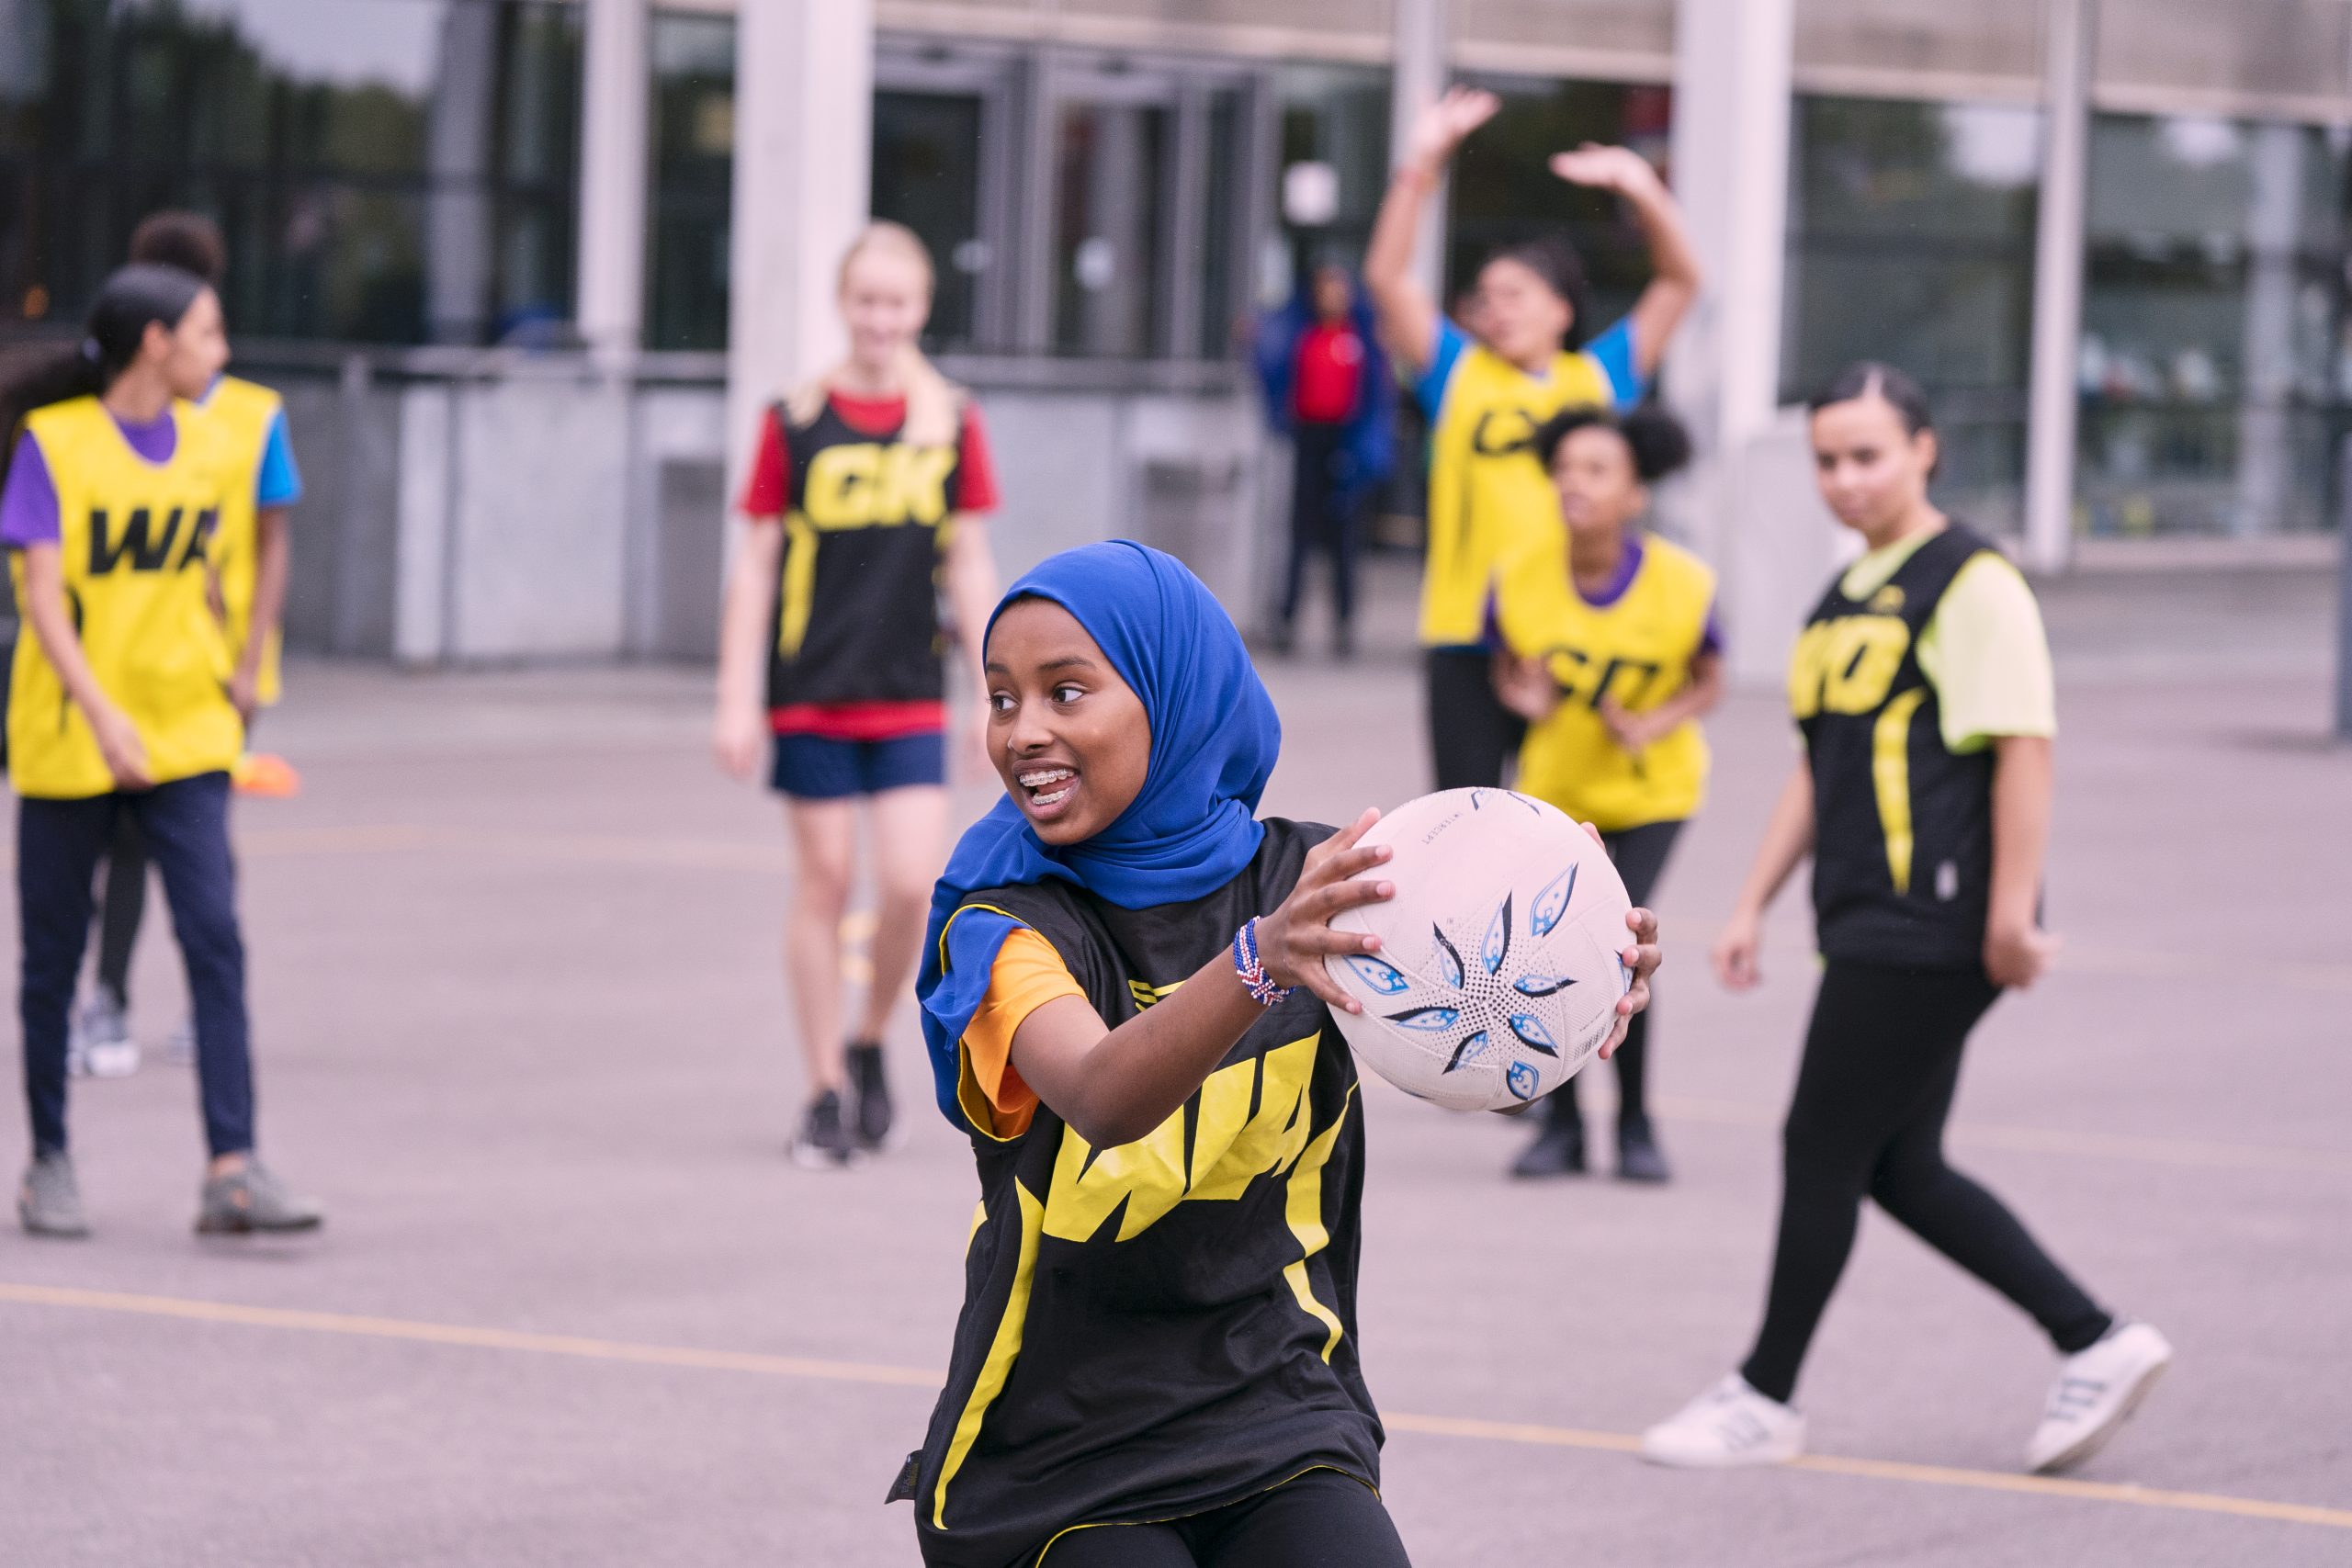 A young Muslim woman playing netball